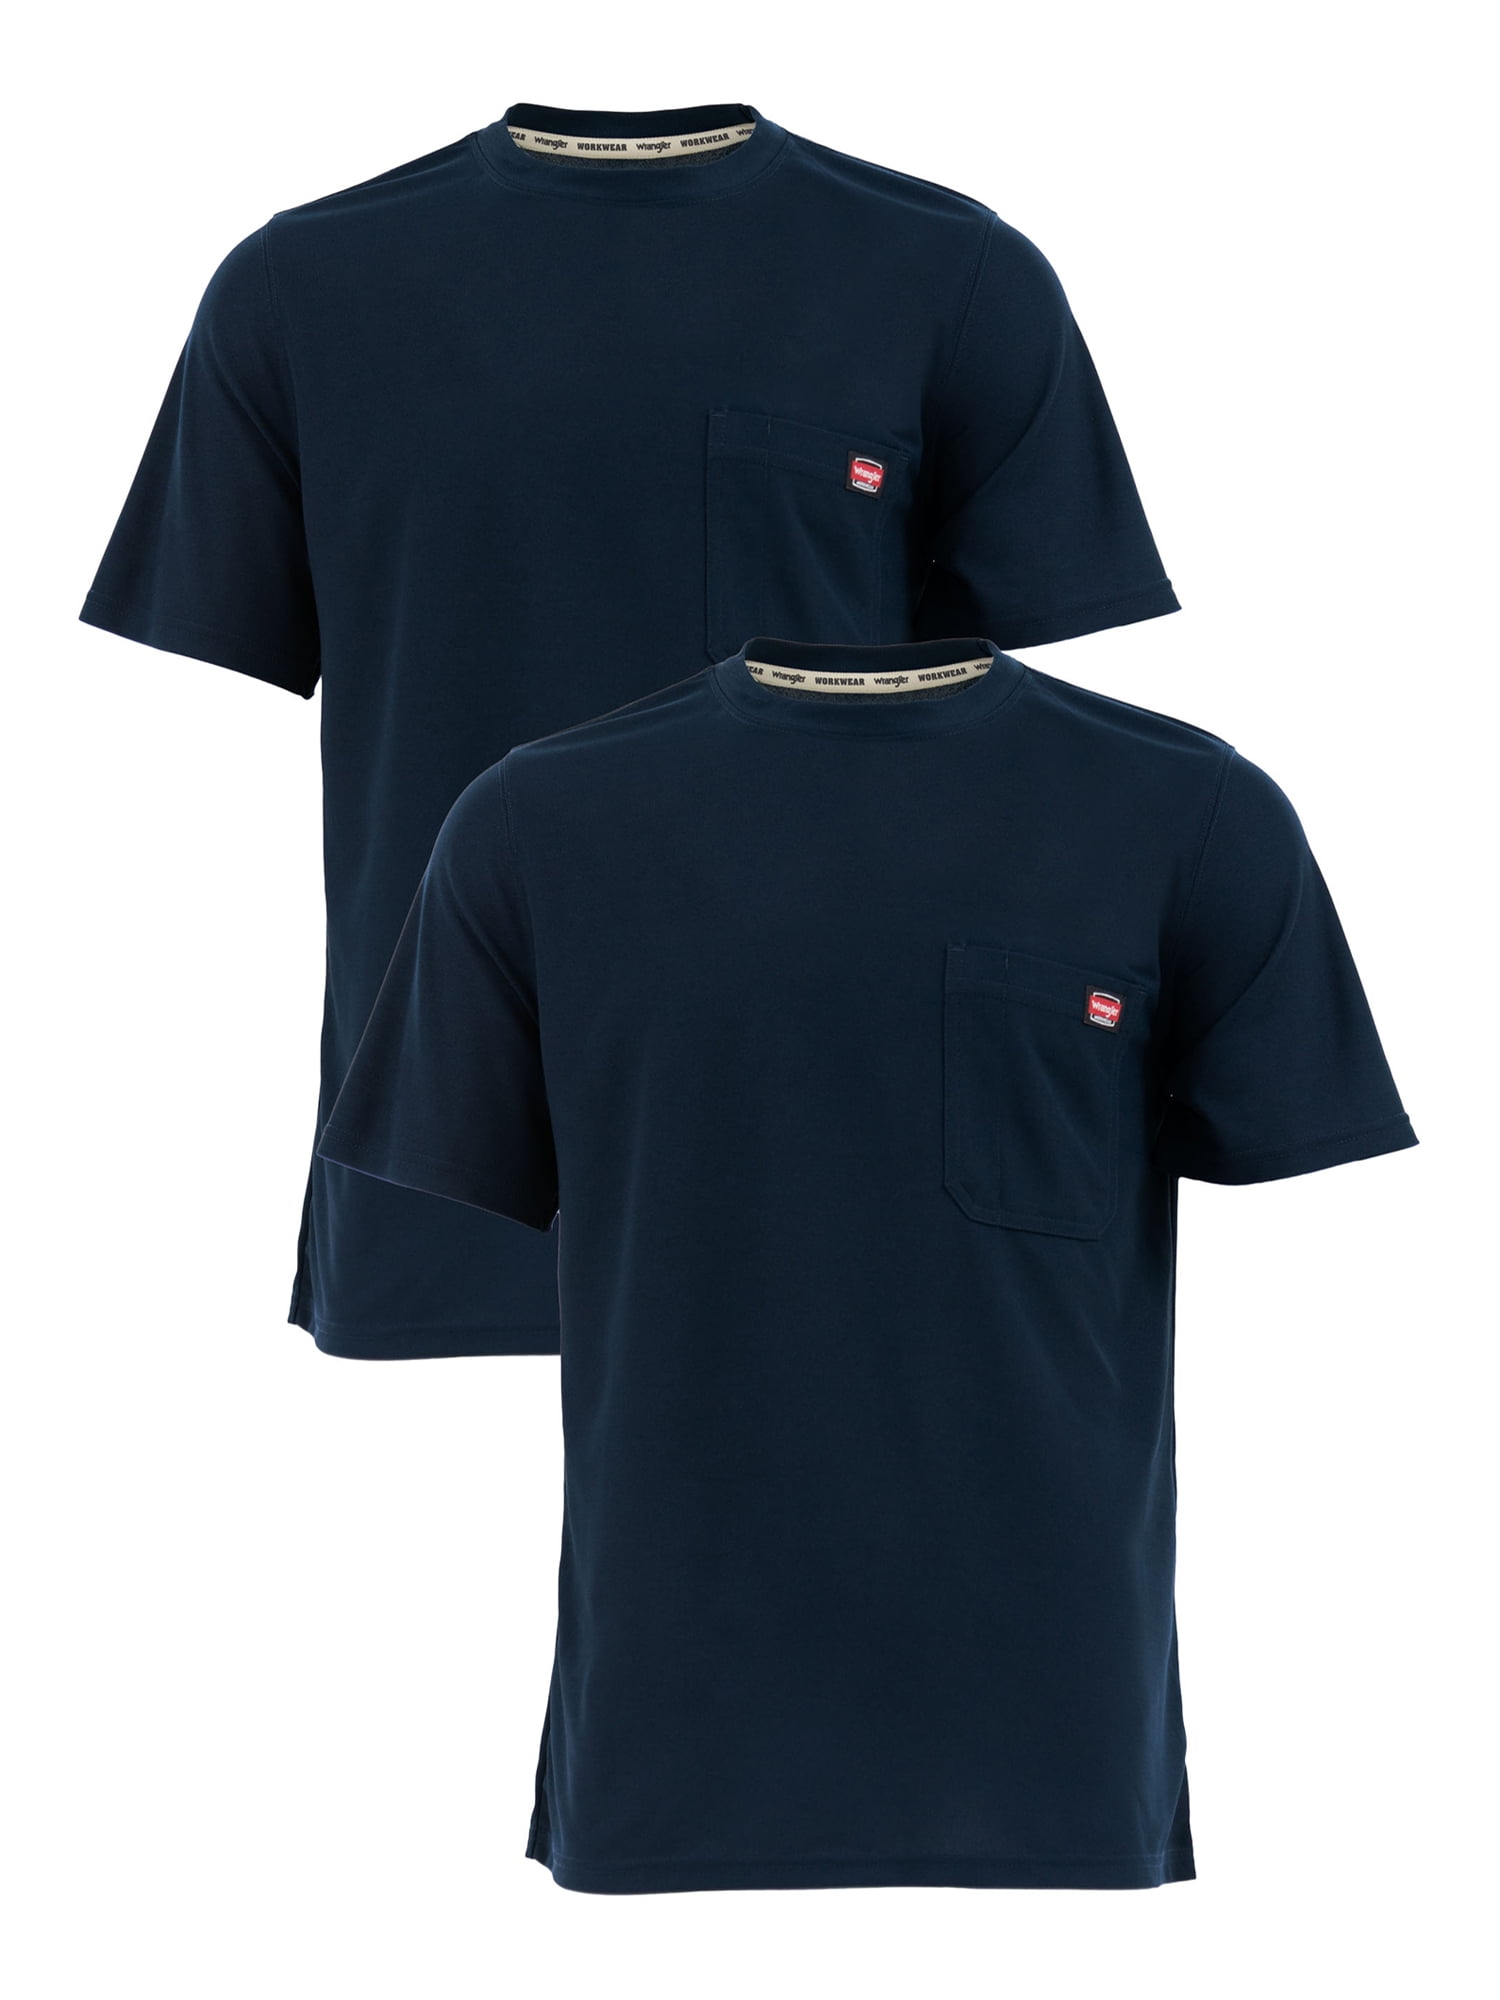 Wrangler Workwear Men's Short Sleeve Performance Tee 2-Pack Bundle -  